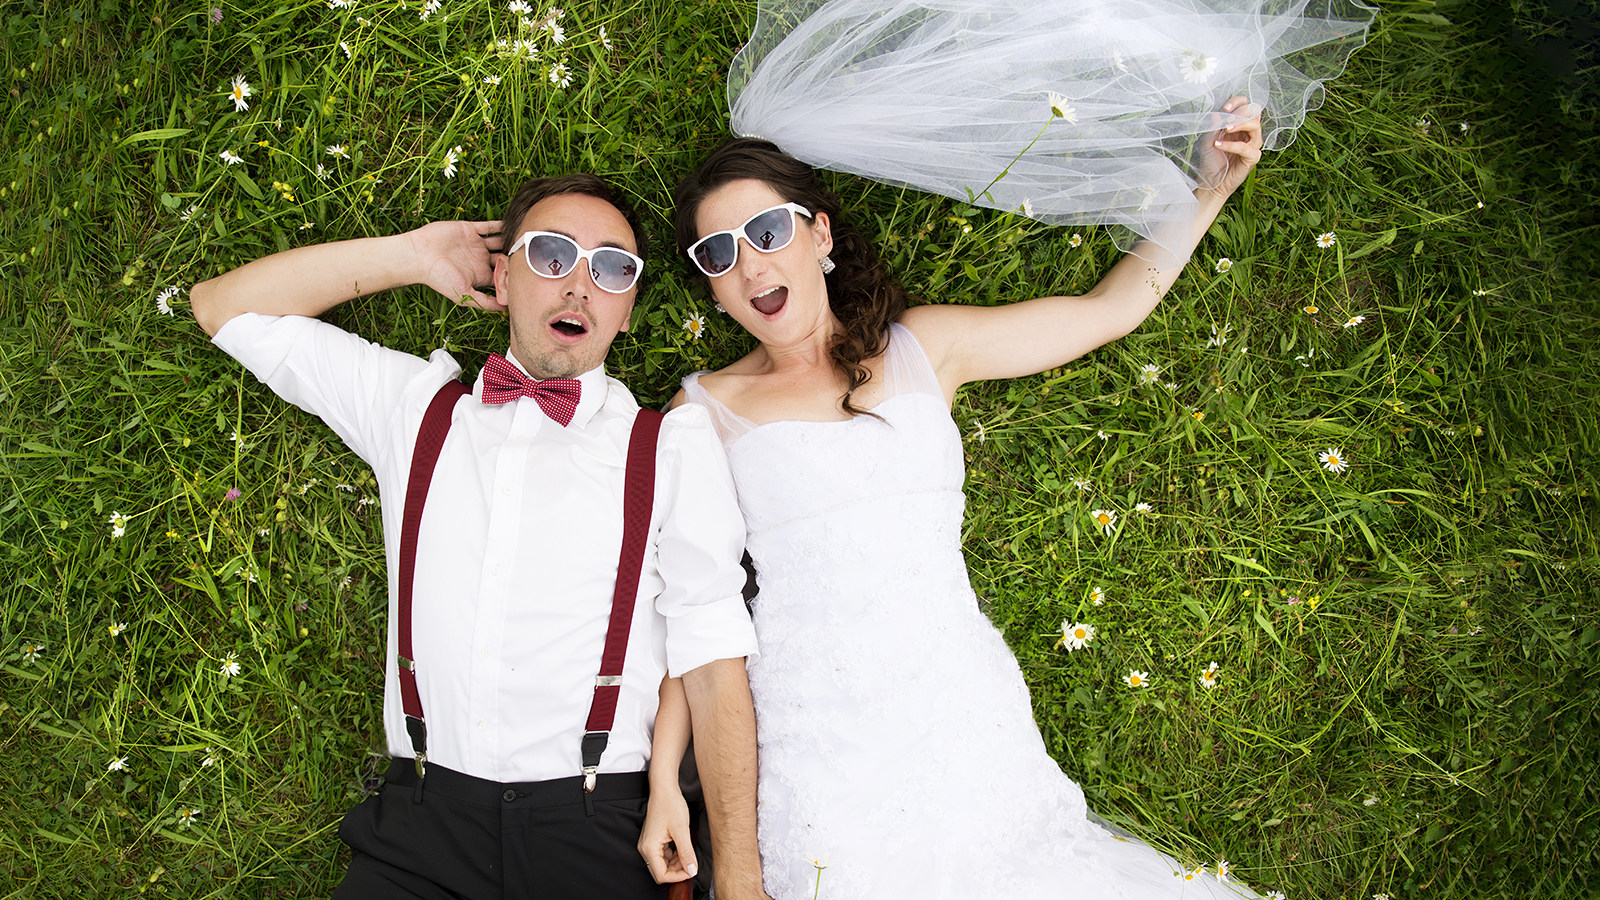 fun wedding couple on grass with sunglasses